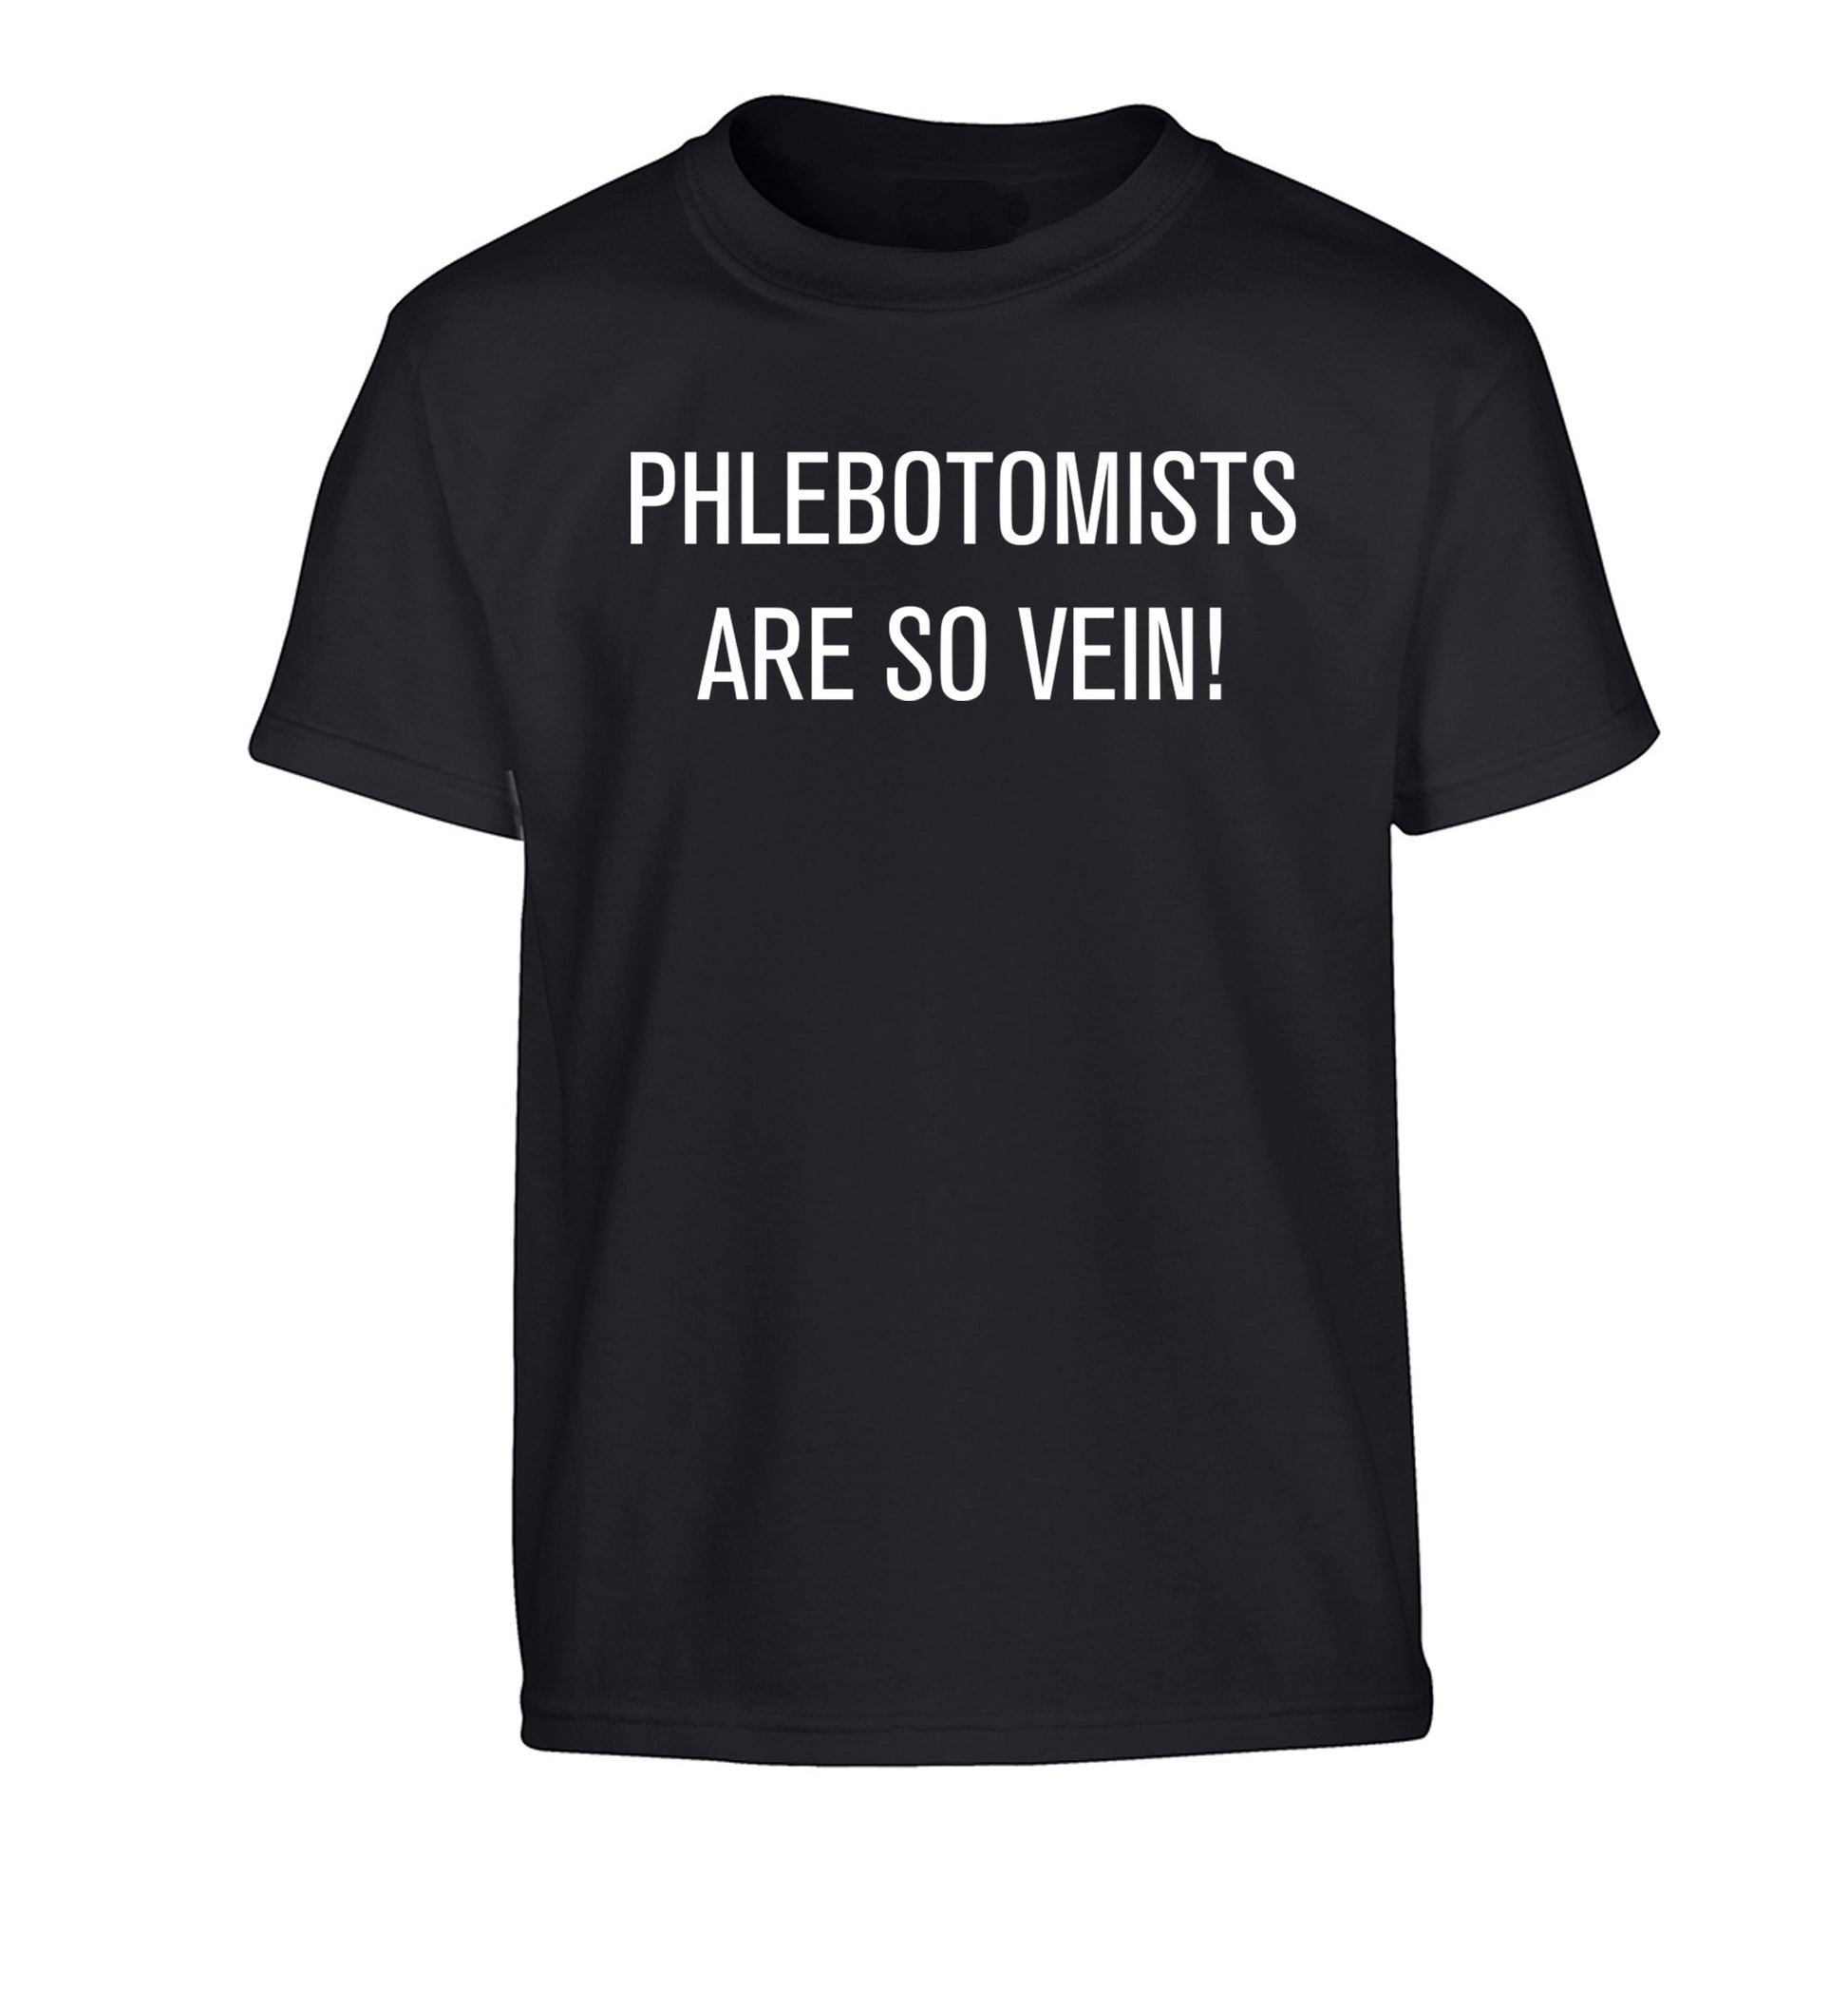 Phlebotomists are so vein! Children's black Tshirt 12-14 Years